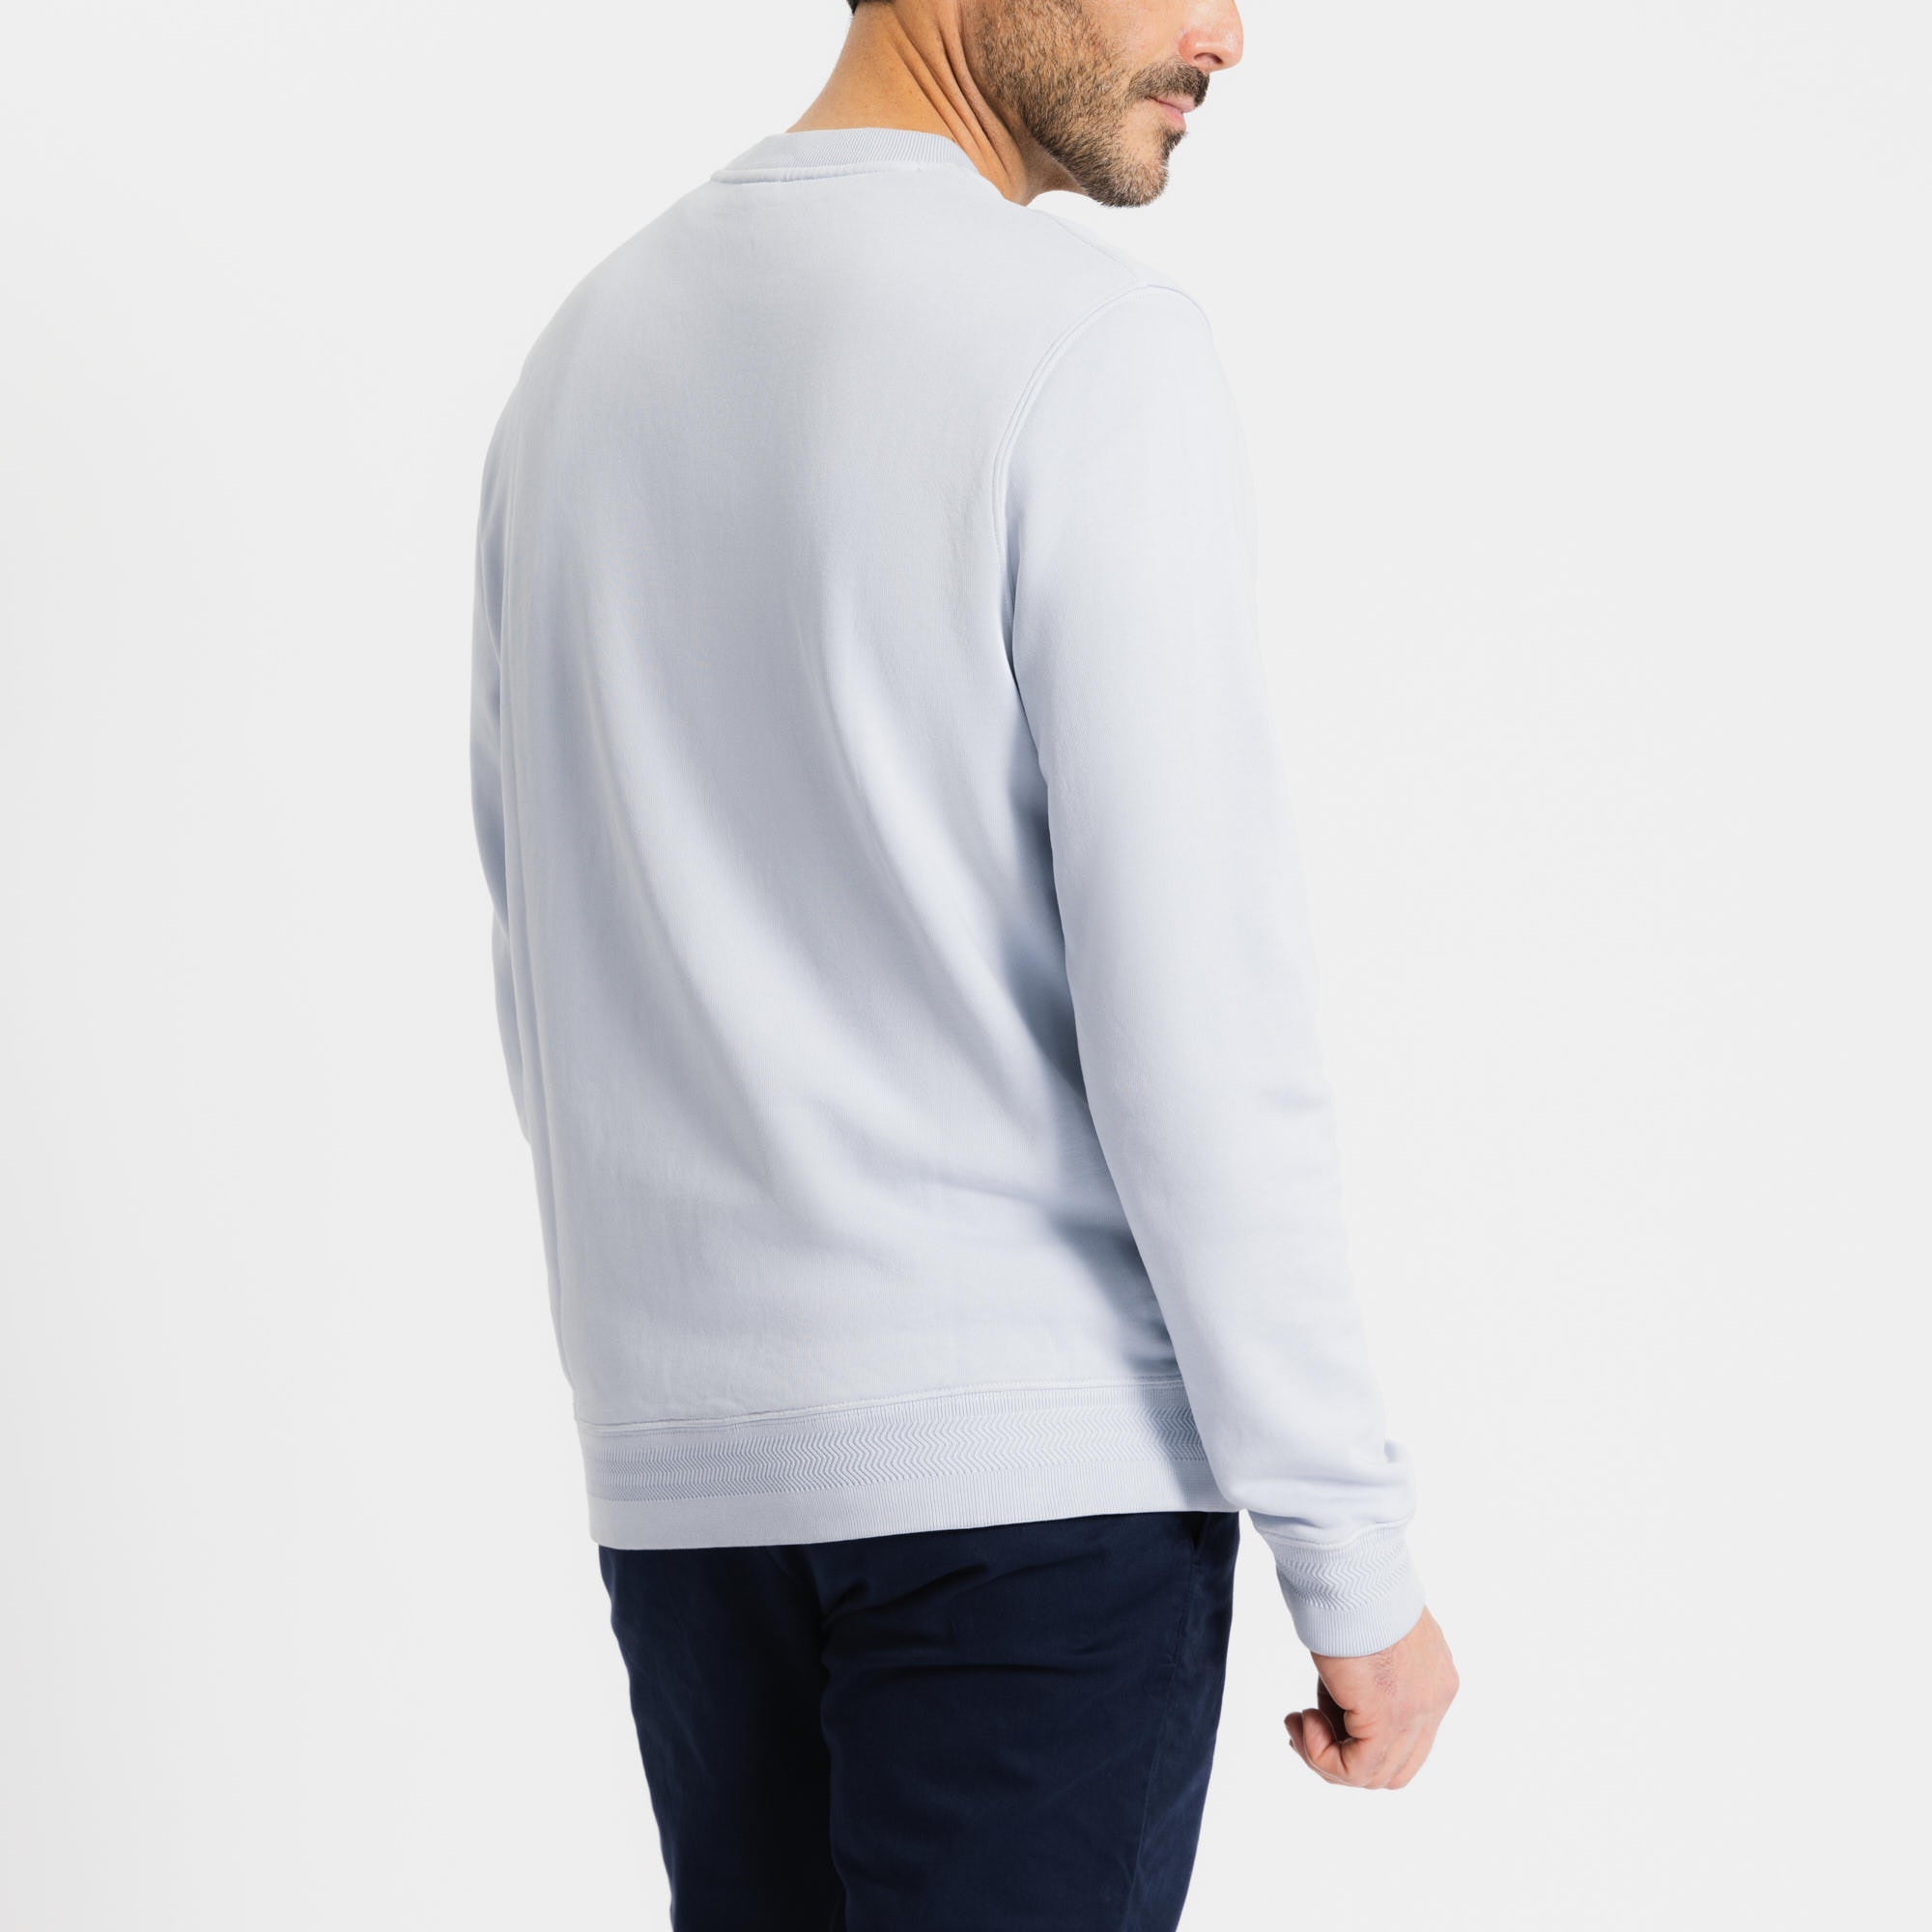 UCLA Men's Lauther Logo Sweatshirt - Light Grey Marl Mens Clothing - Zavvi  US